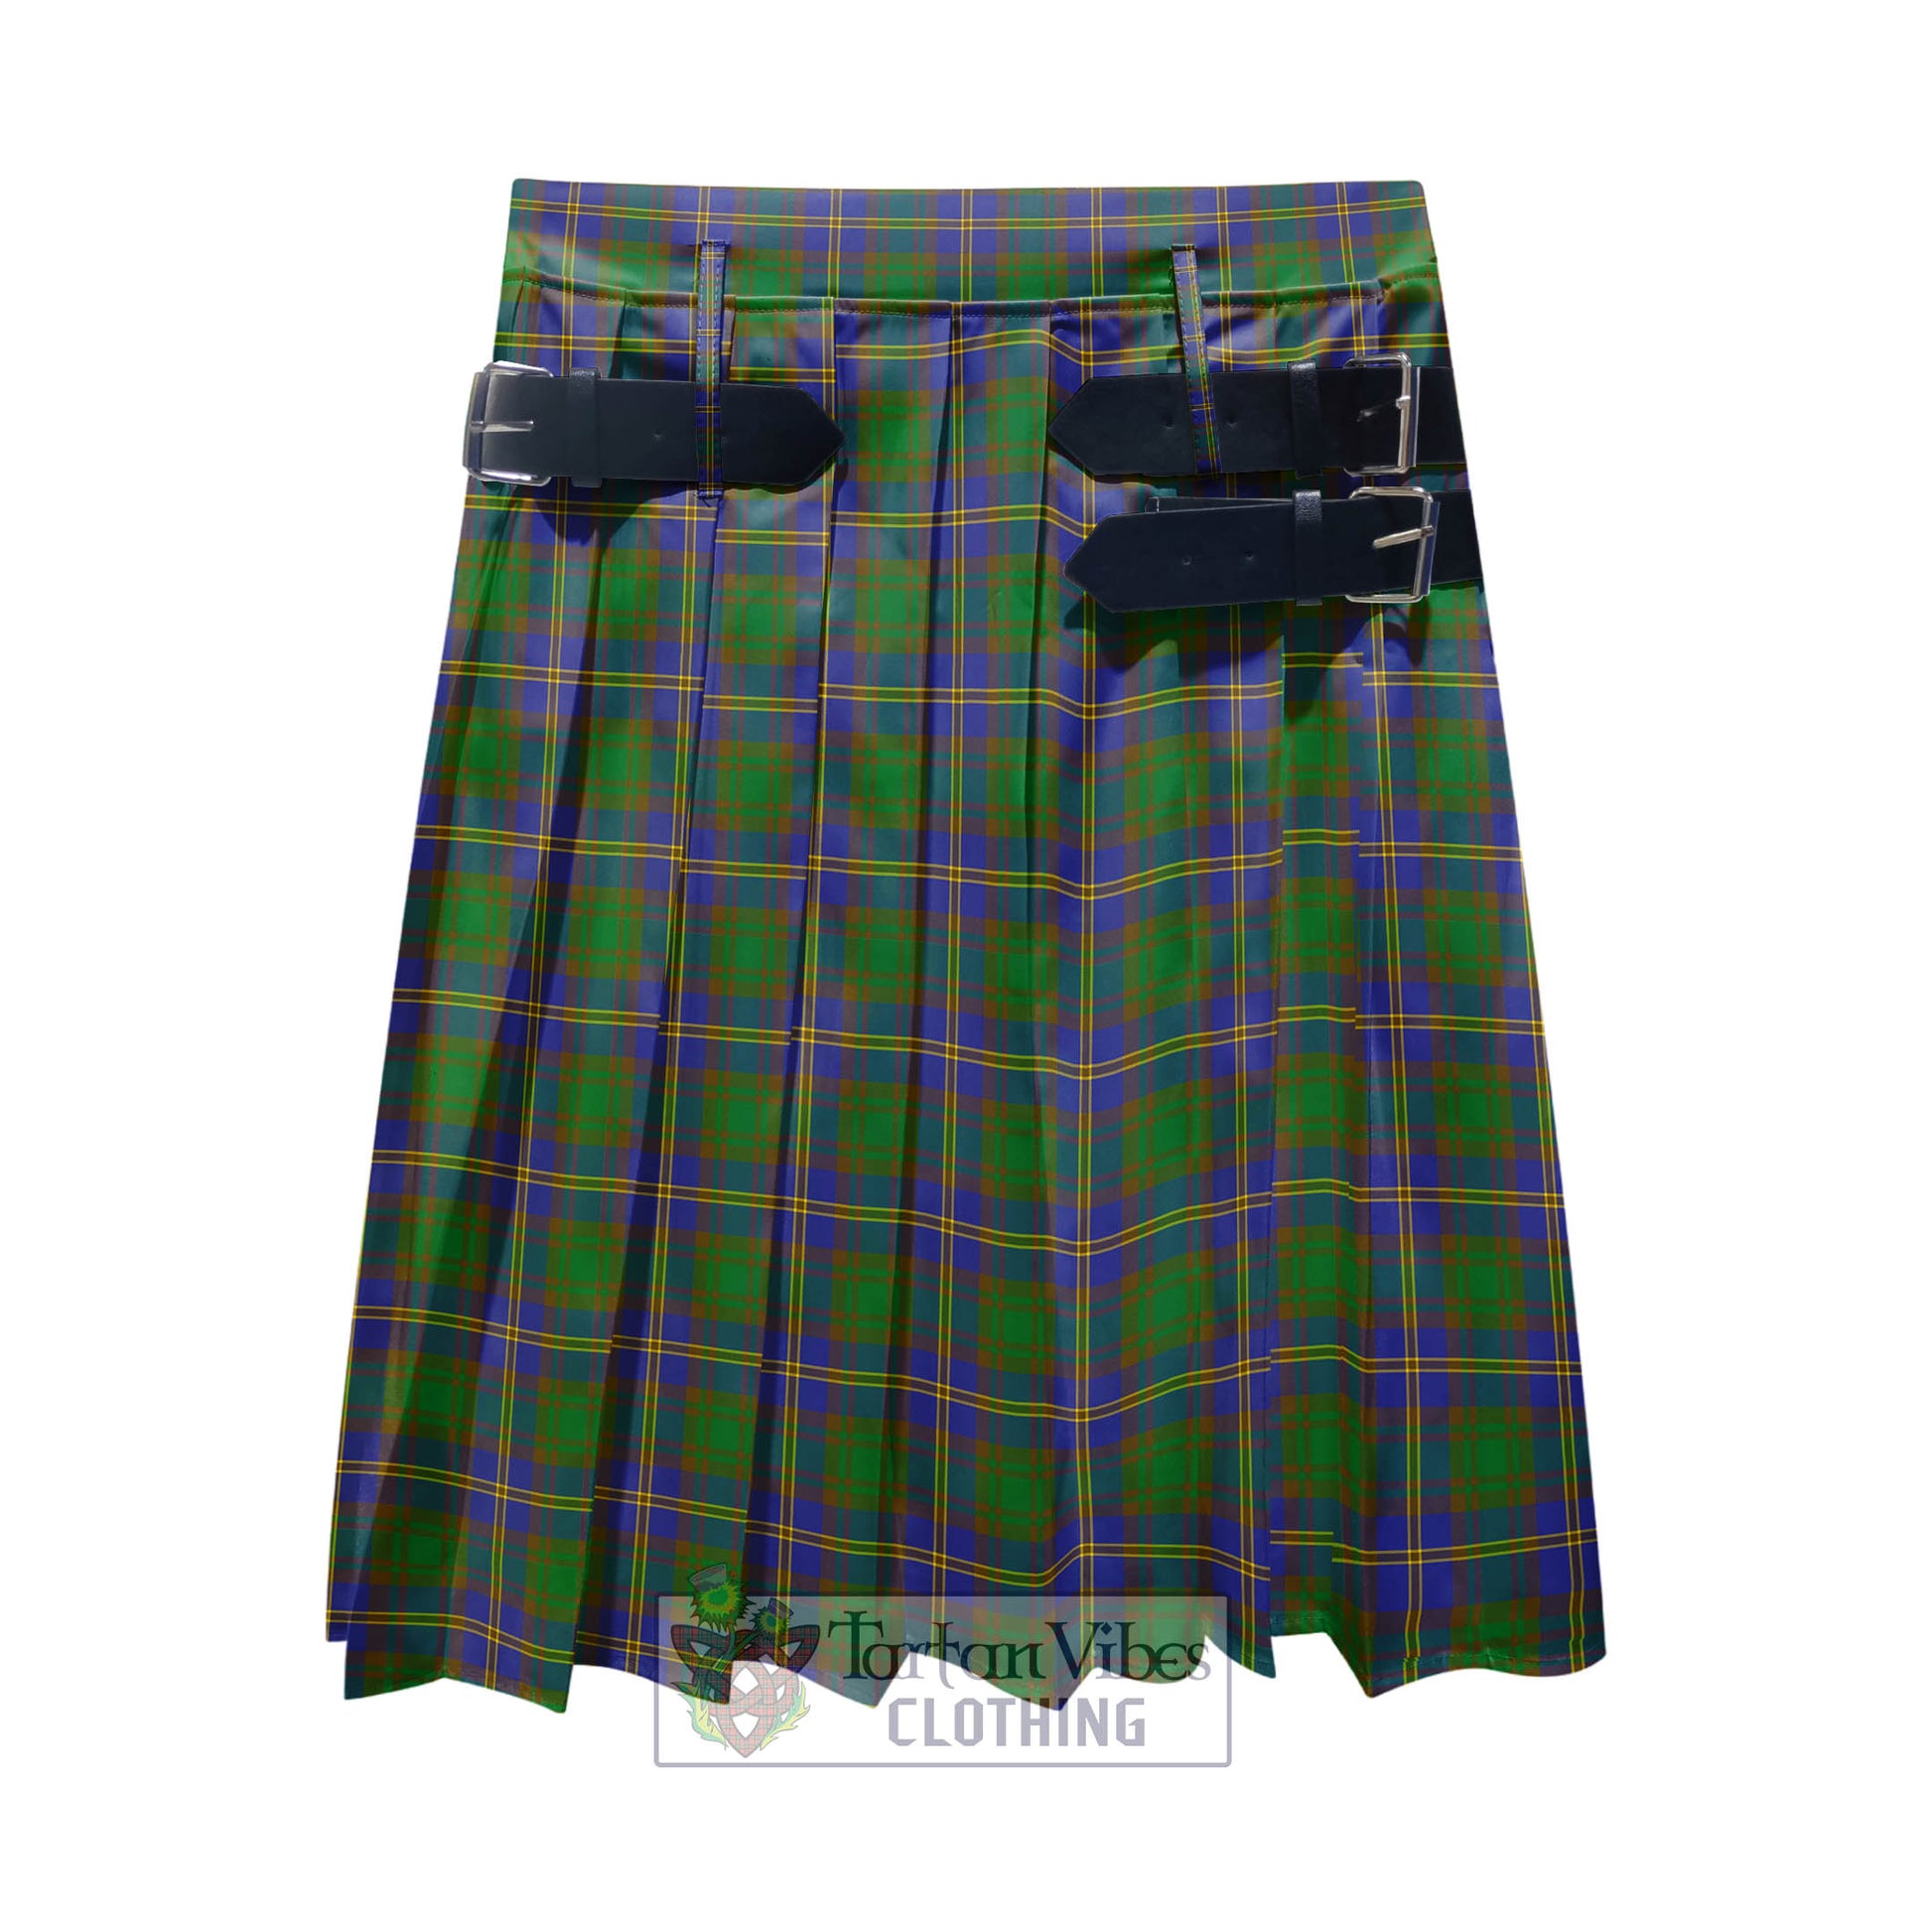 Tartan Vibes Clothing Strange of Balkaskie Tartan Men's Pleated Skirt - Fashion Casual Retro Scottish Style